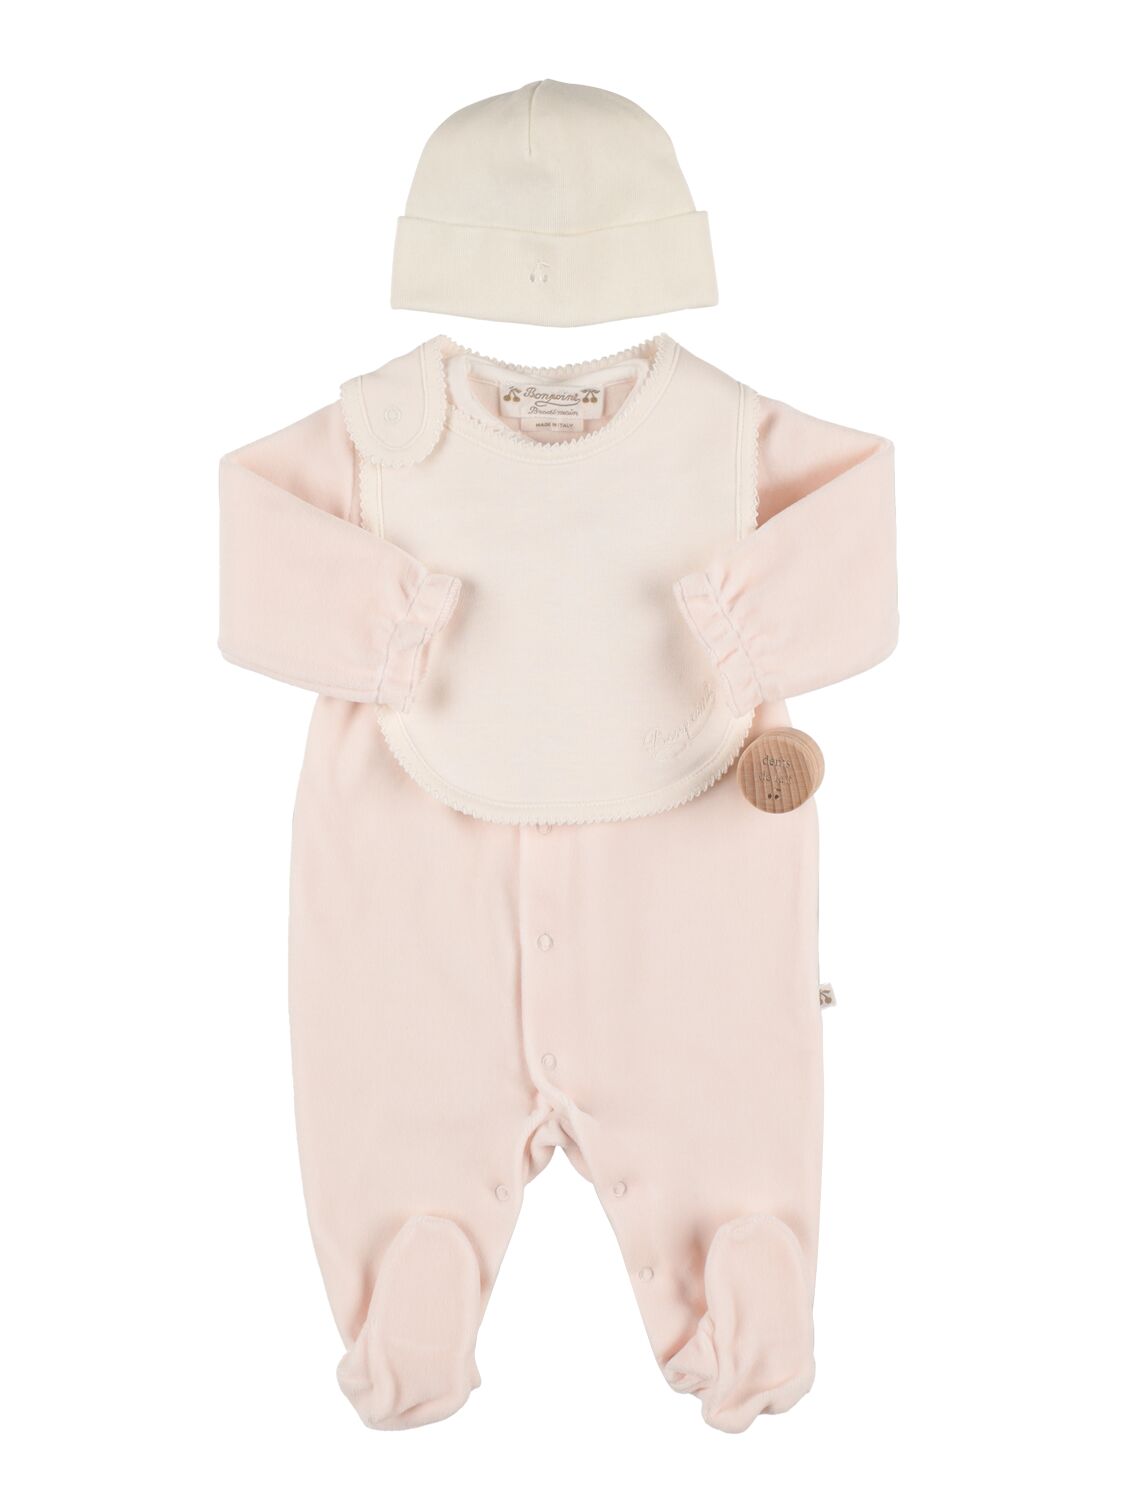 Bonpoint Babies' Cotton Romper, Bib & Hat In Light Pink